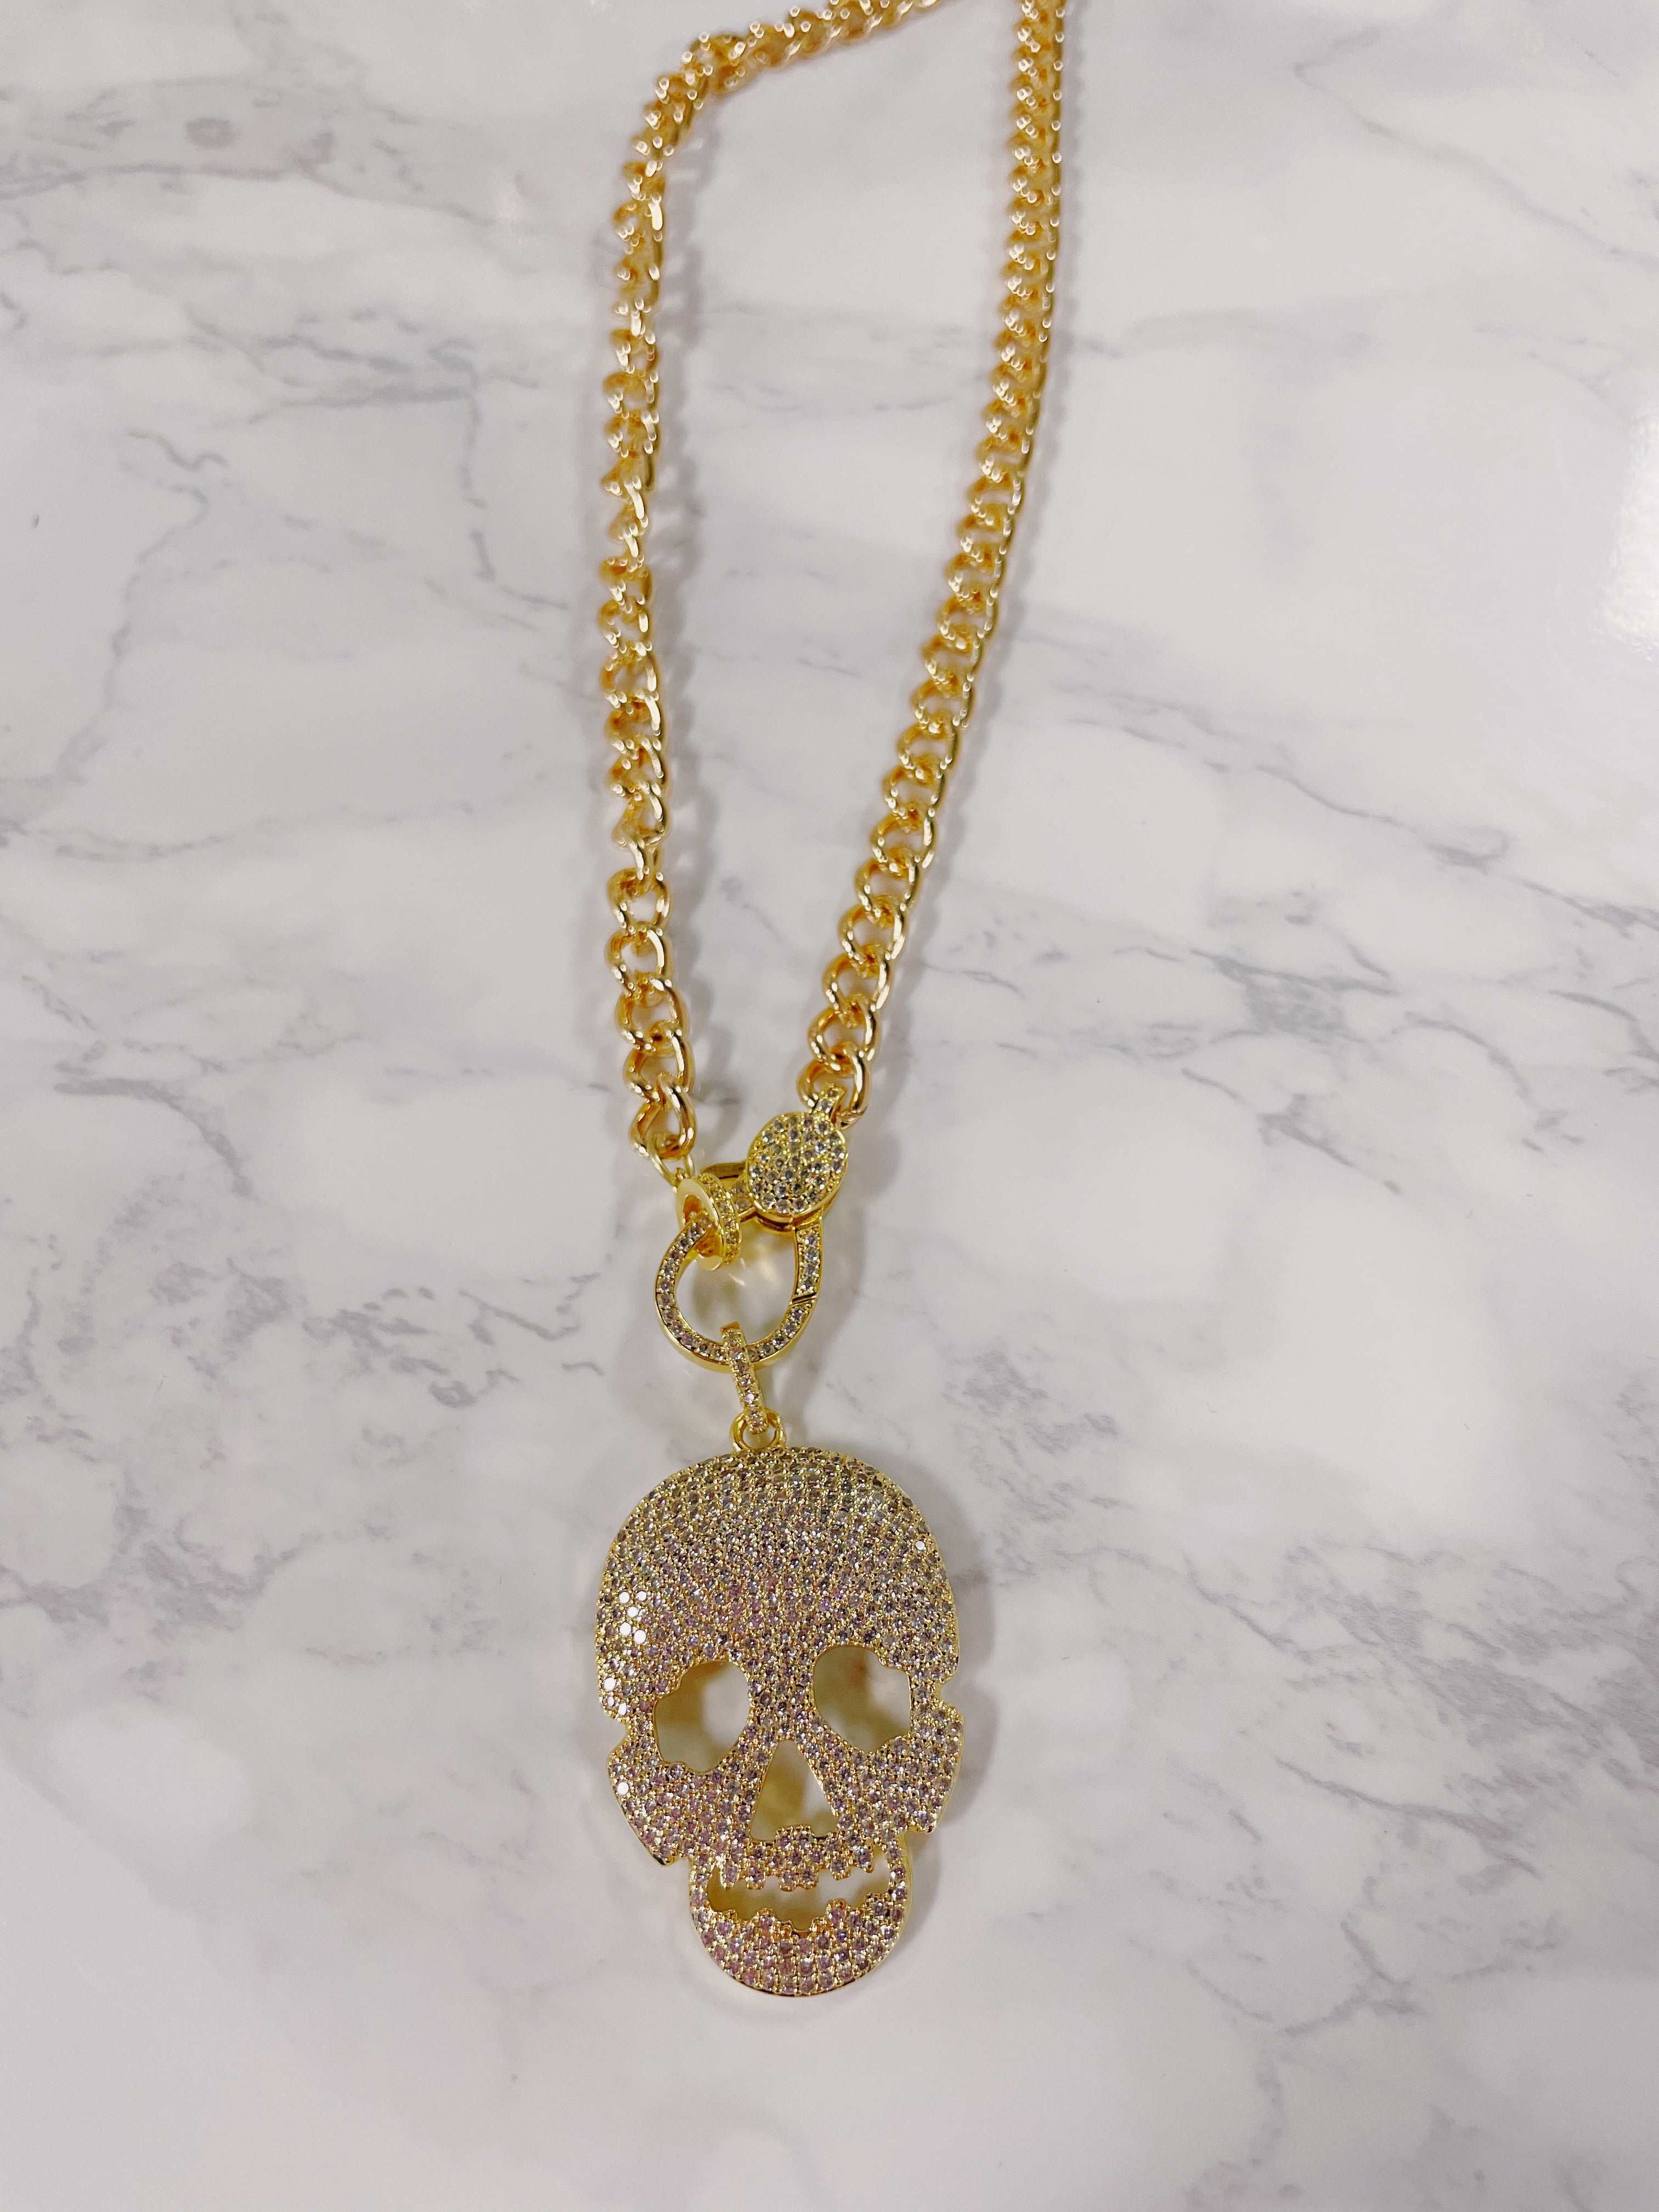 Carolina skull necklace